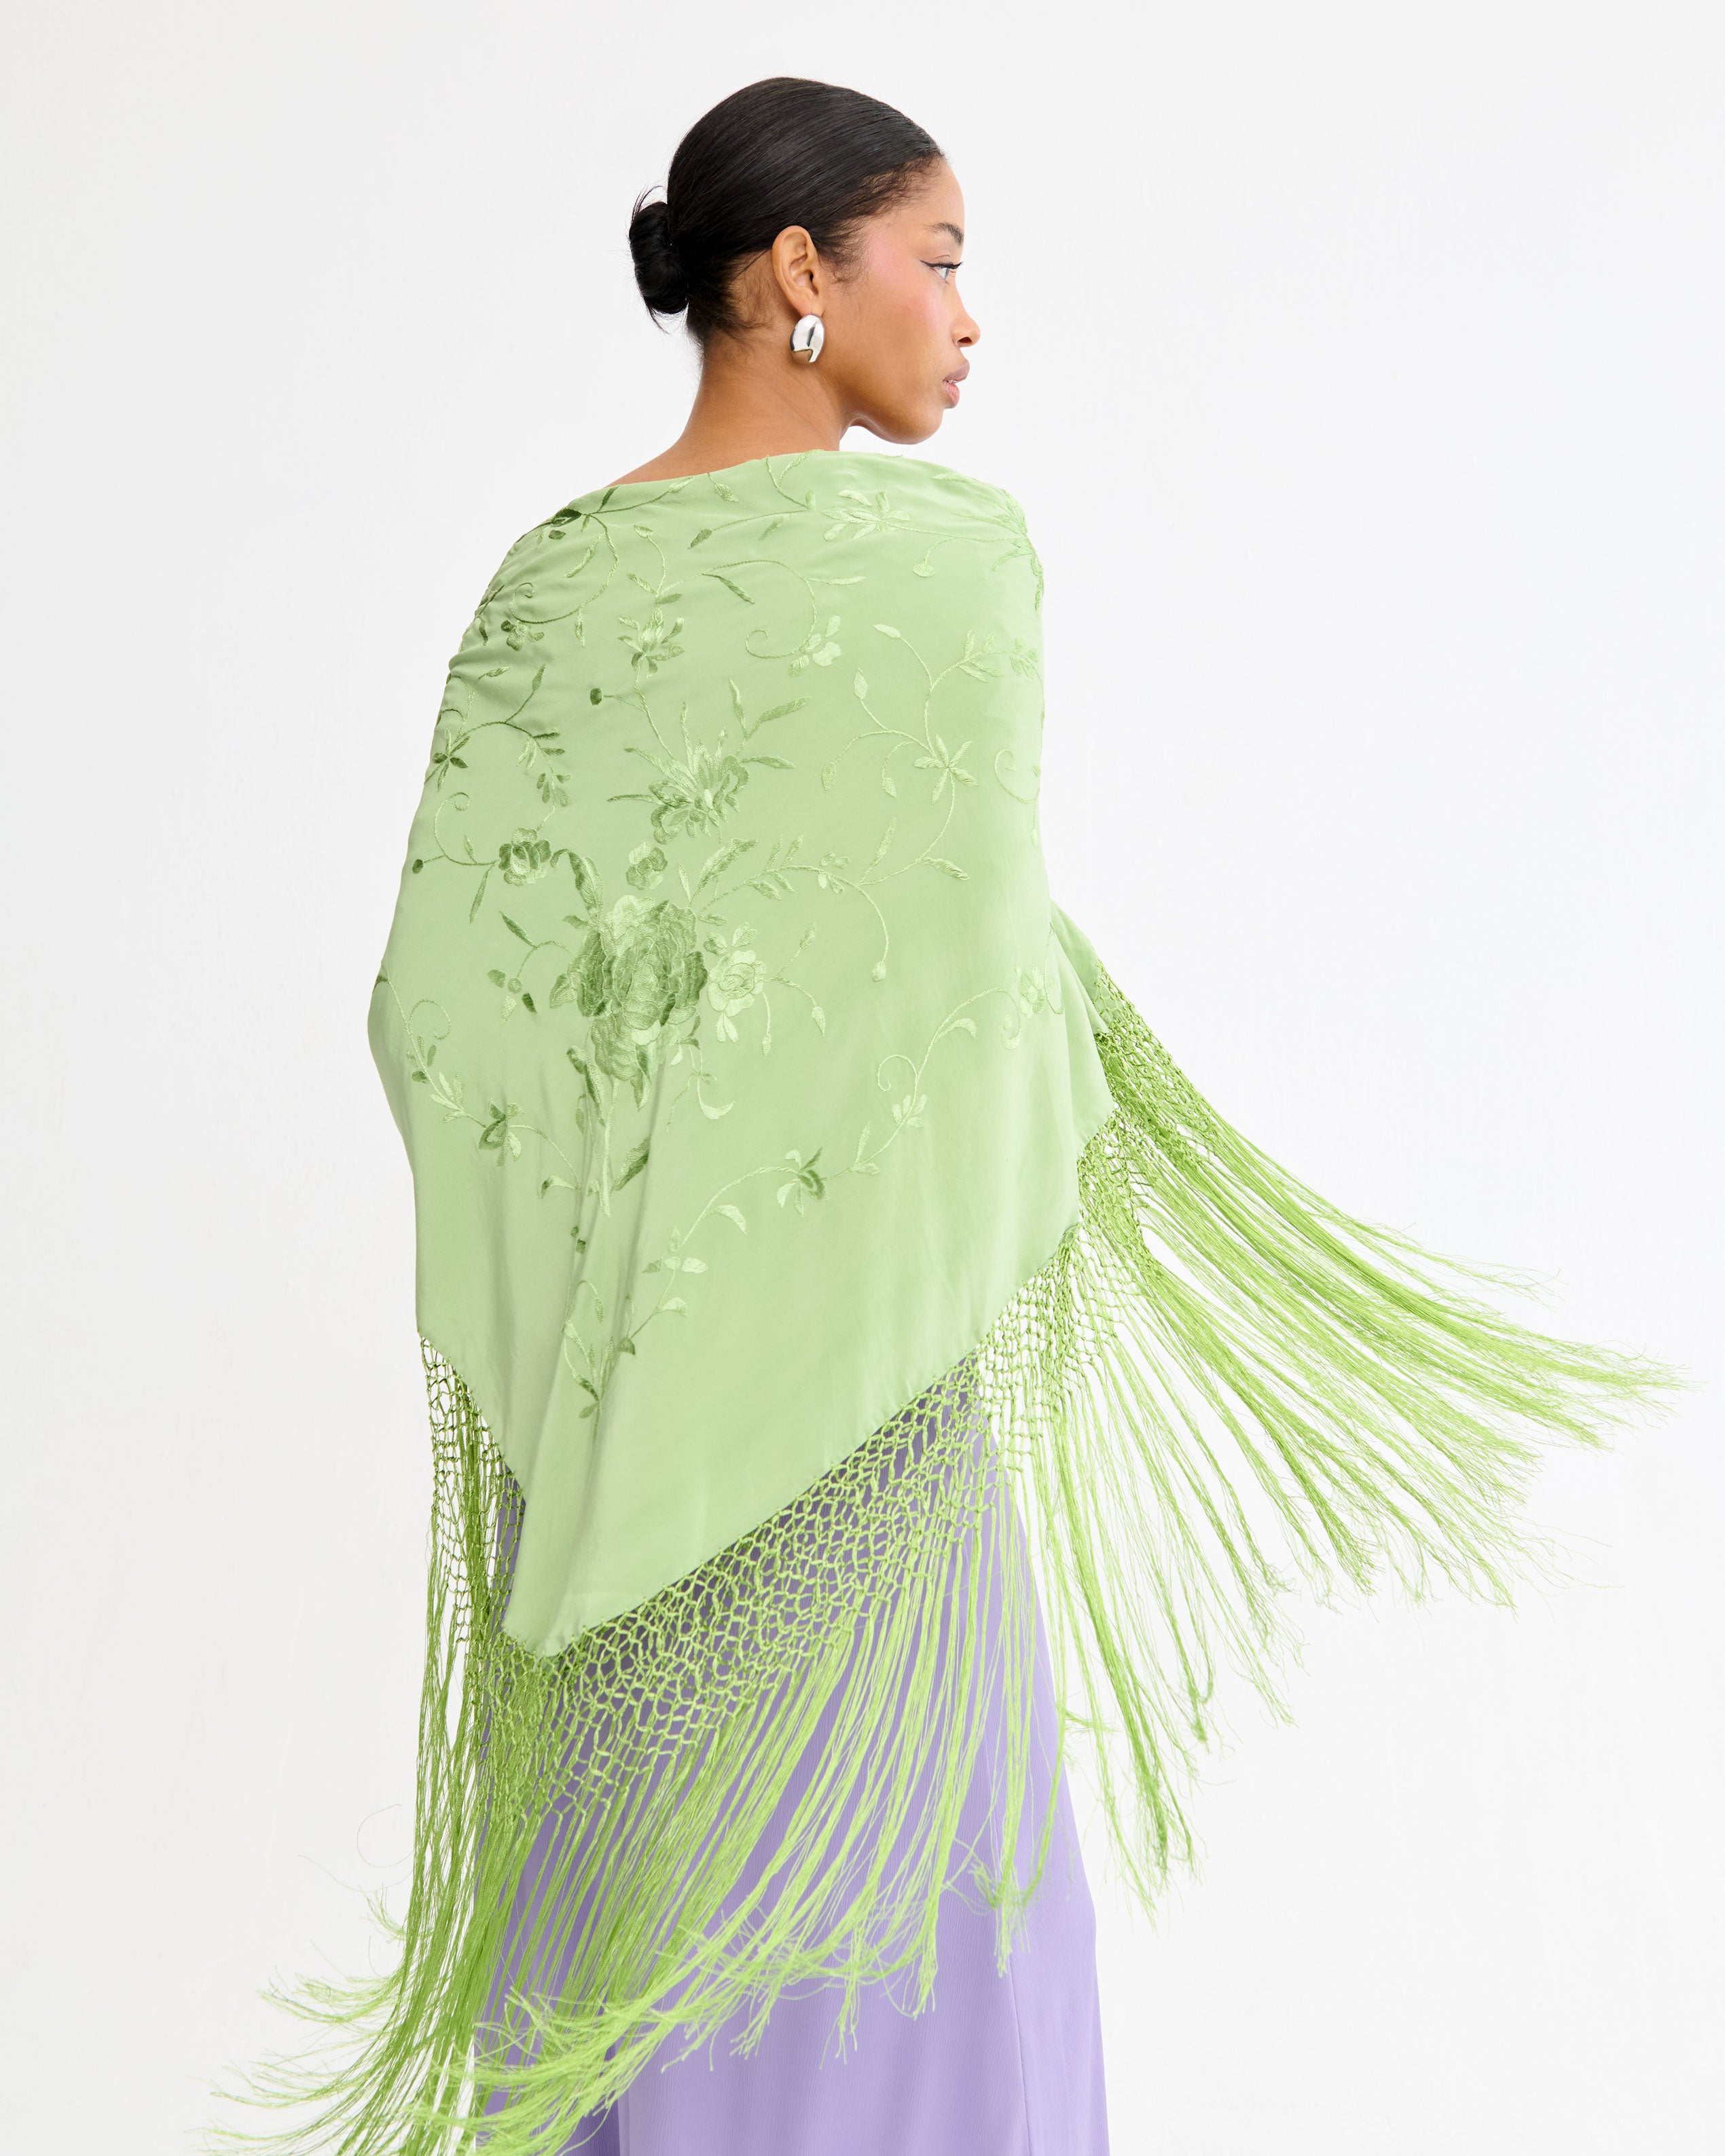 Celadon Manila shawl